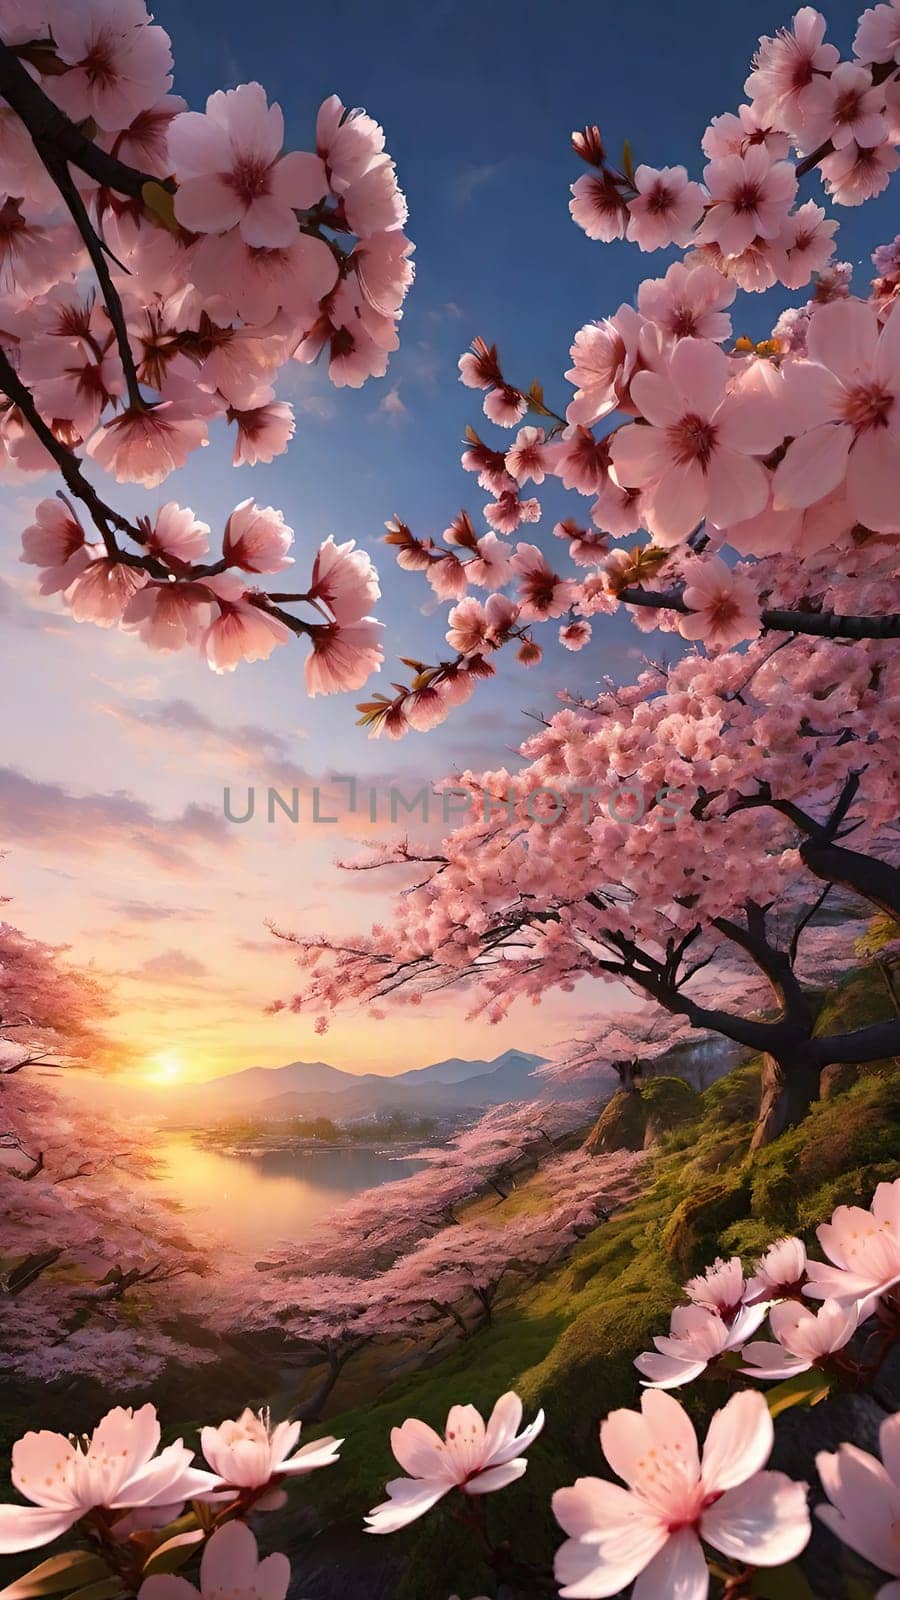 cherry blossom in spring with blue sky background, by yilmazsavaskandag